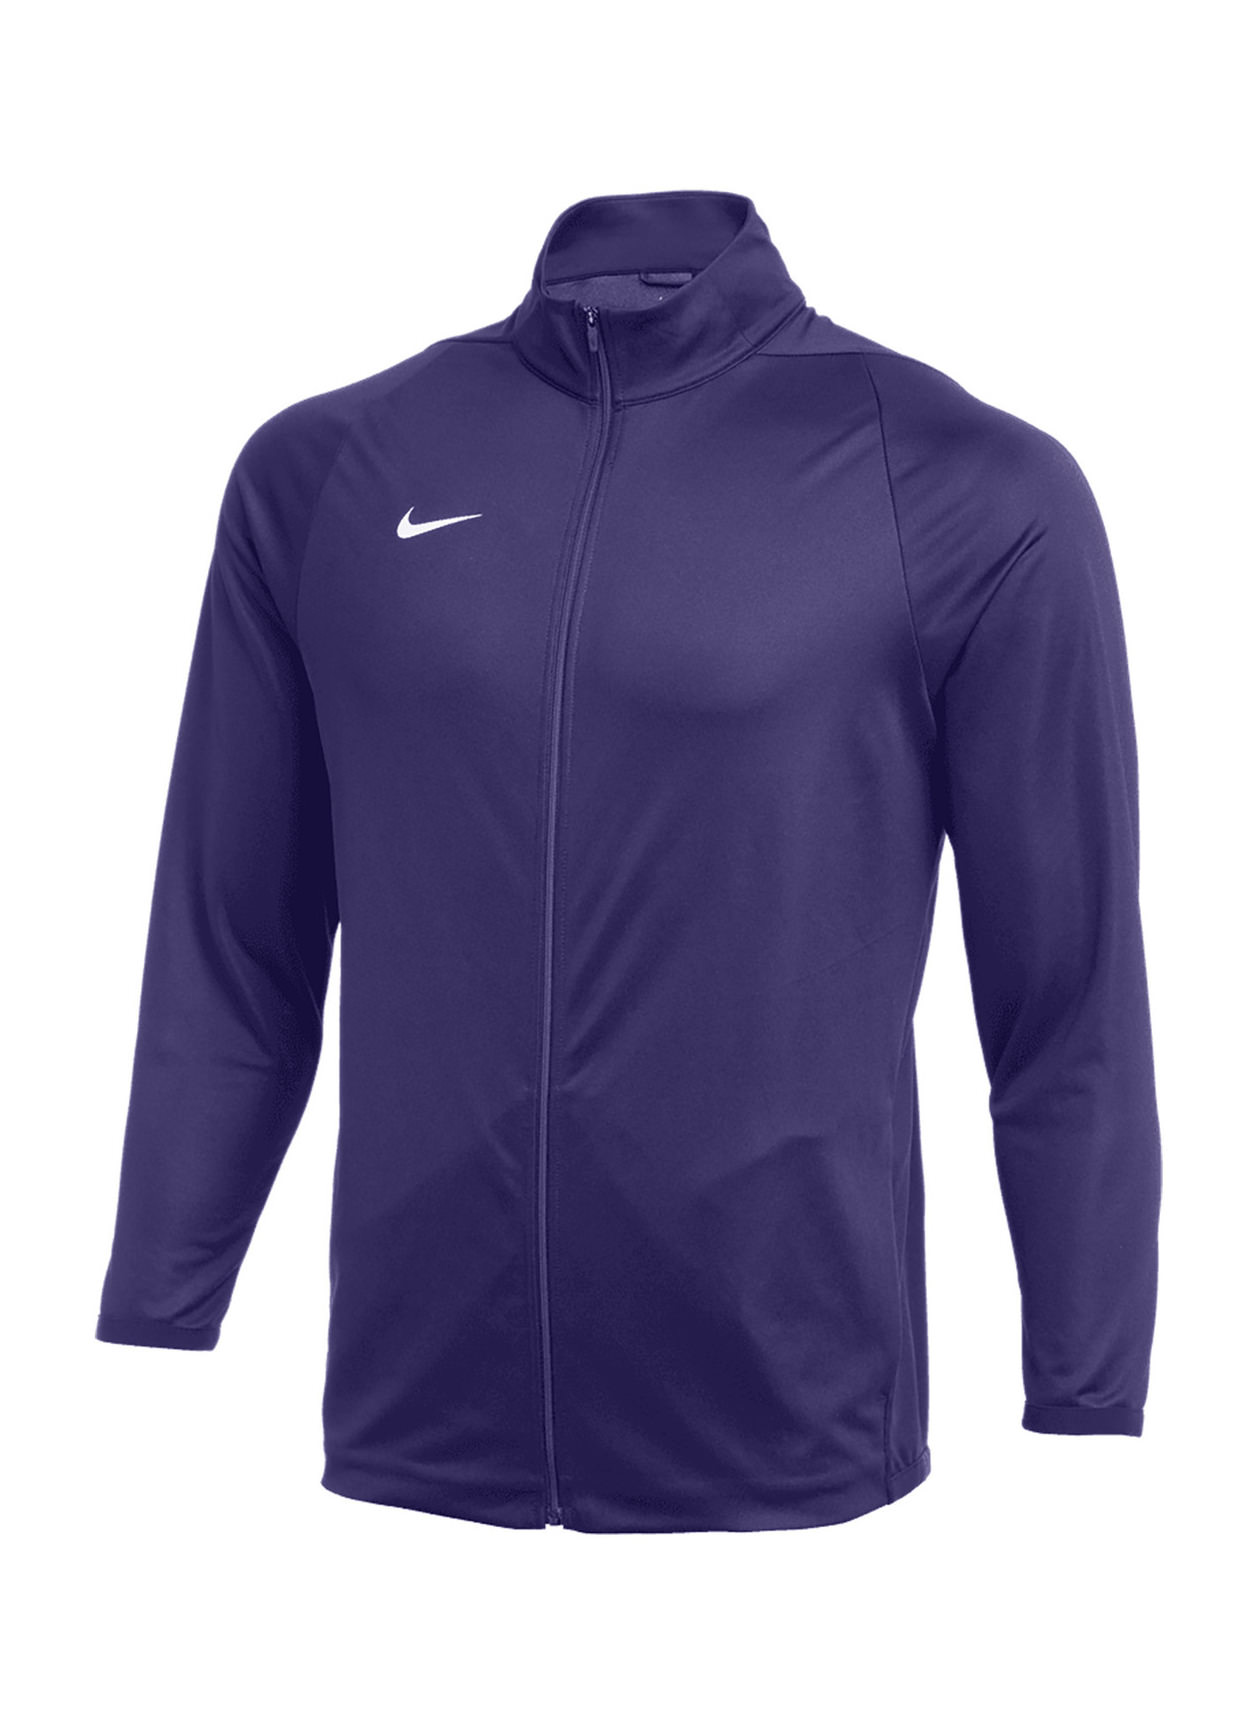 Men's Nike Epic Knit Jacket 2.0 Team Purple / White